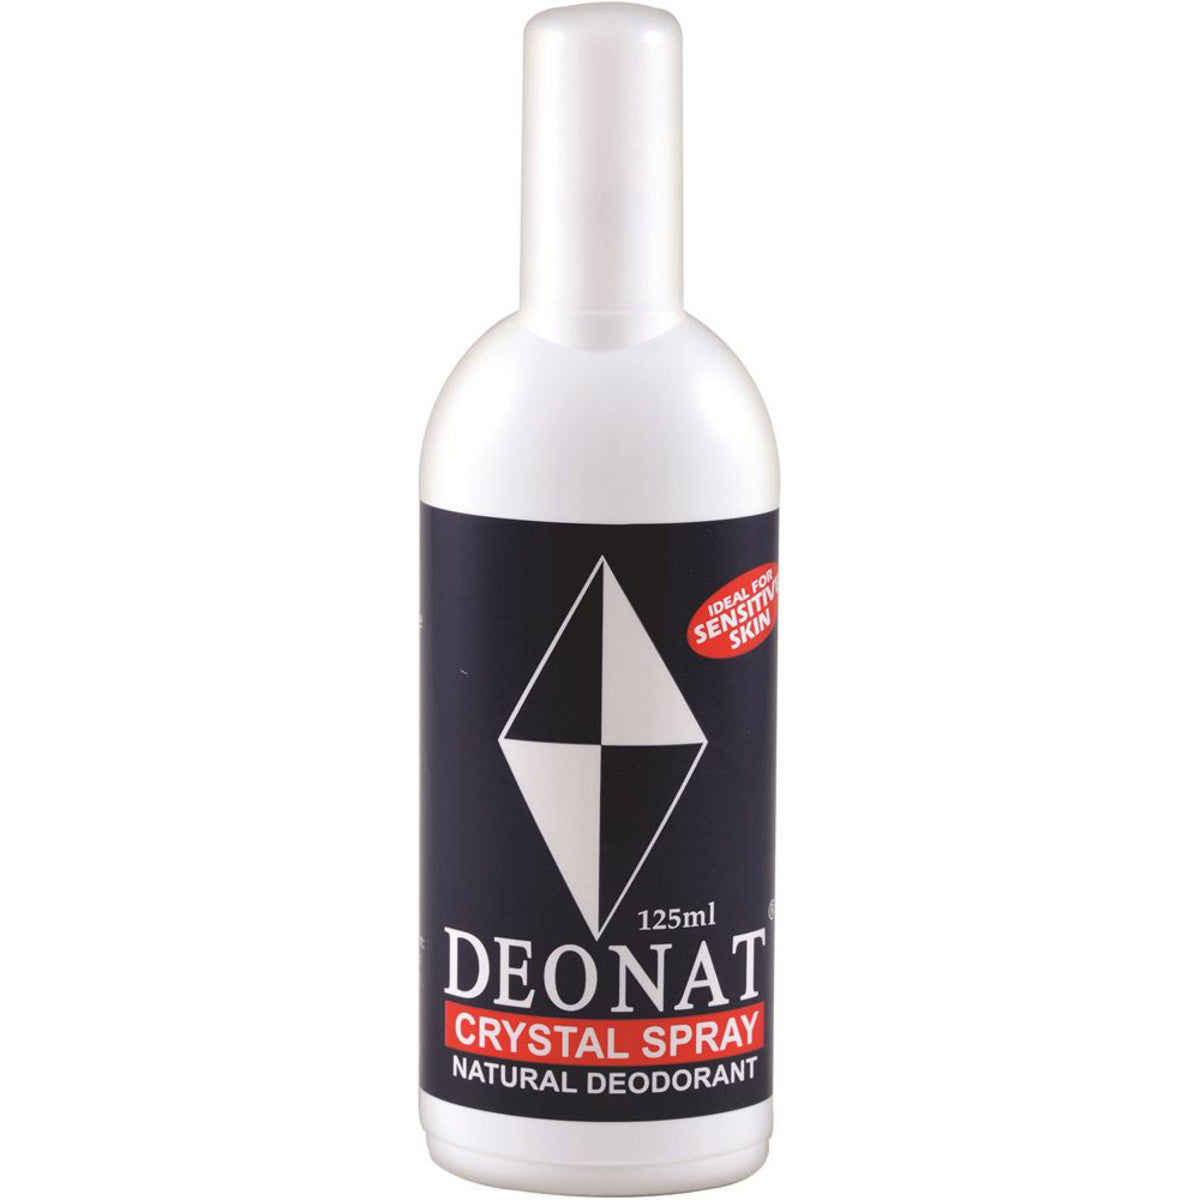 Deonat Crystal Deodorant 125ml, Spray